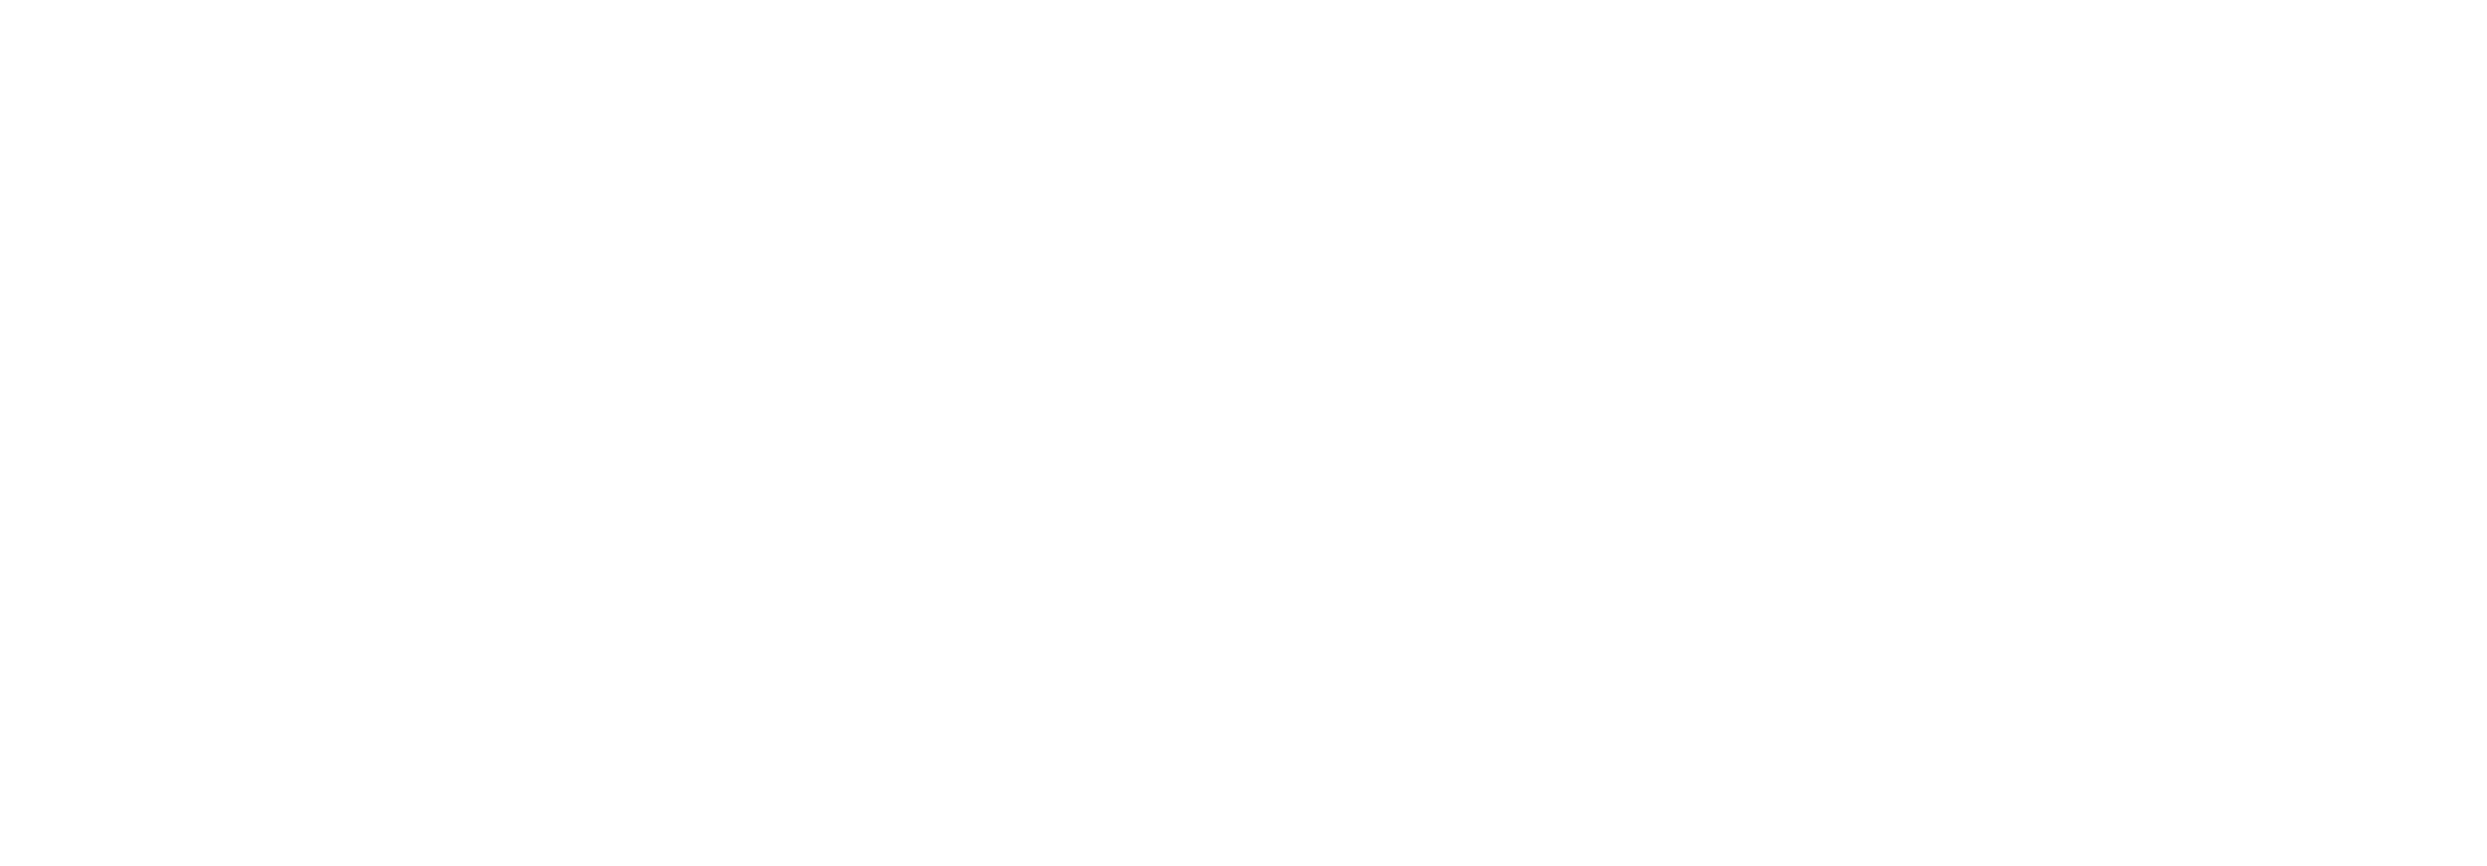 Berkeley Skydeck Logo